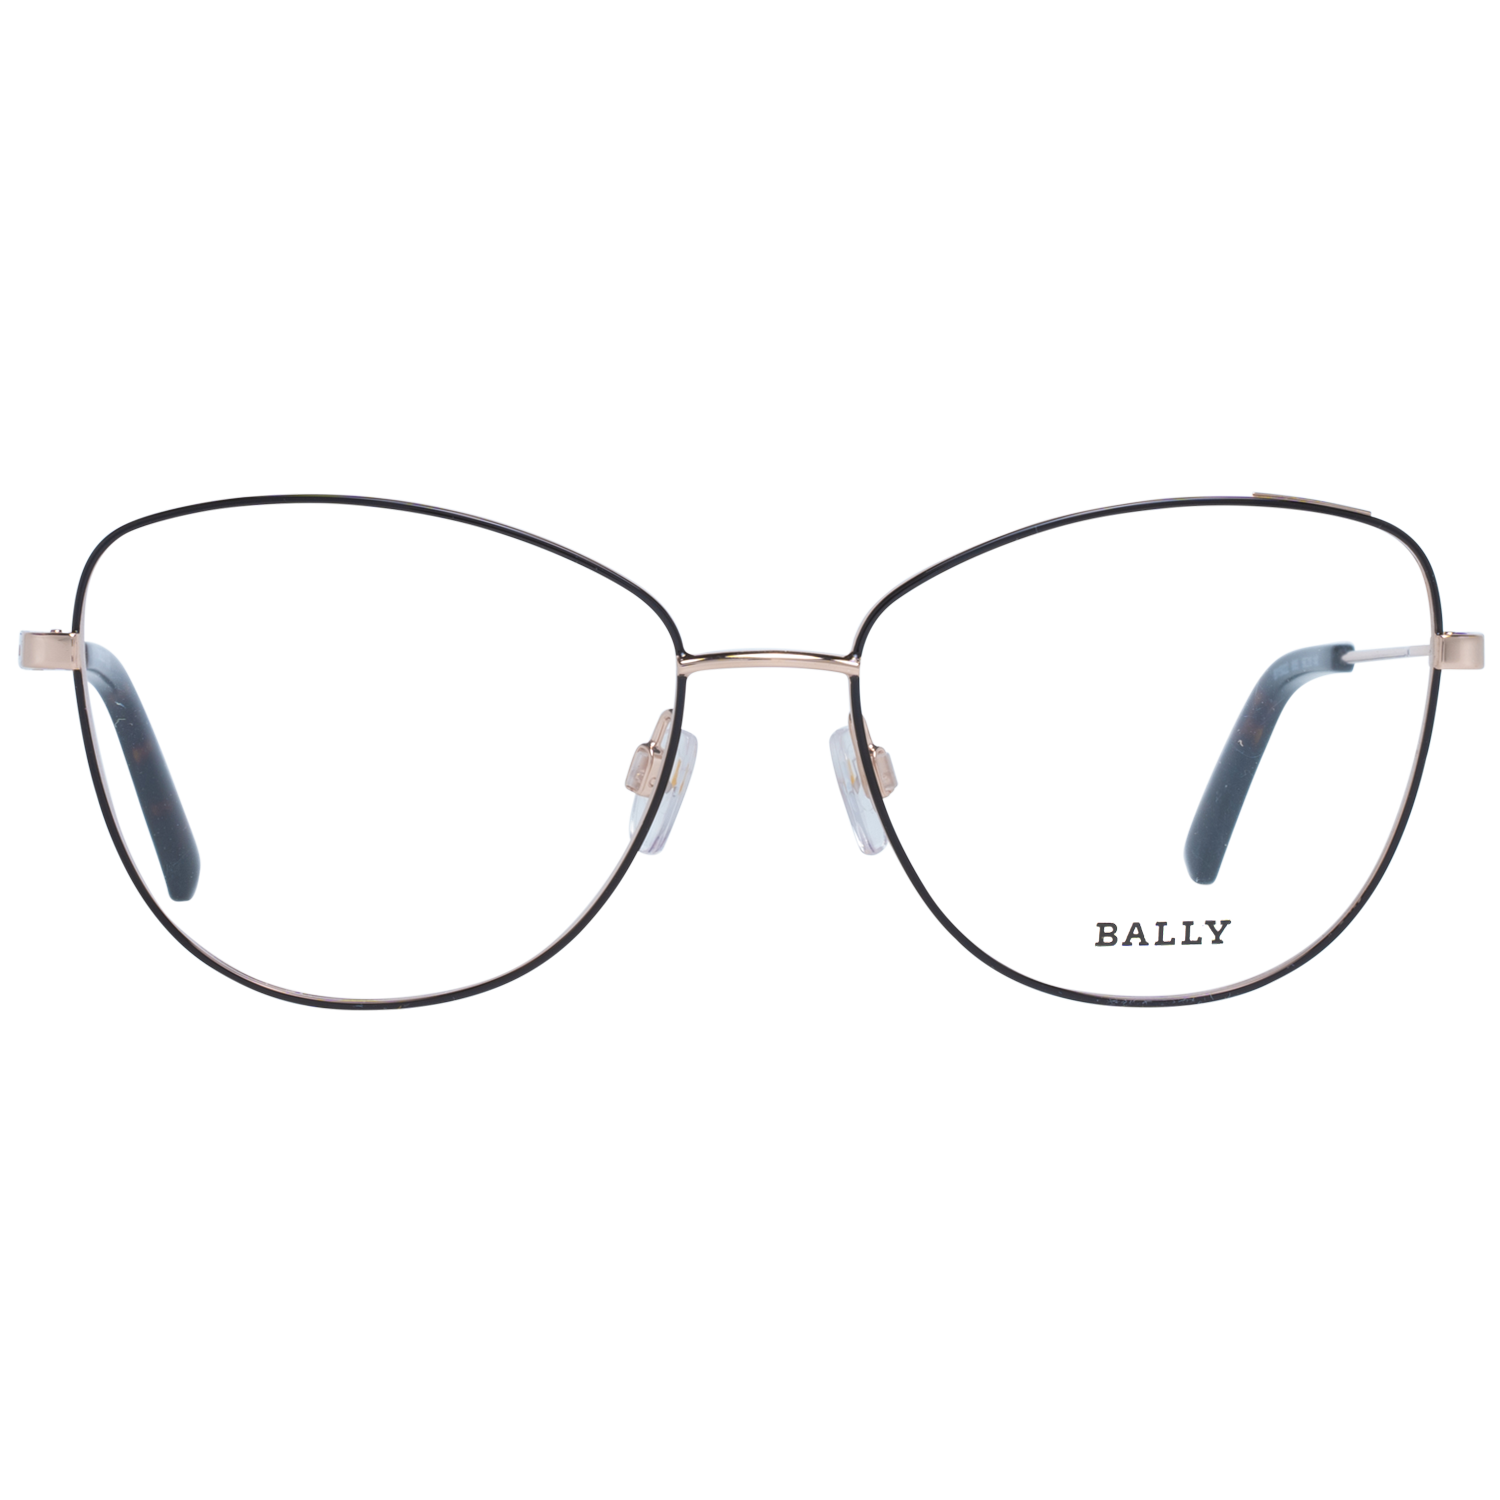 Bally Optical Frame Bally Eyeglasses Frames BY5022 005 56 Eyeglasses Eyewear UK USA Australia 